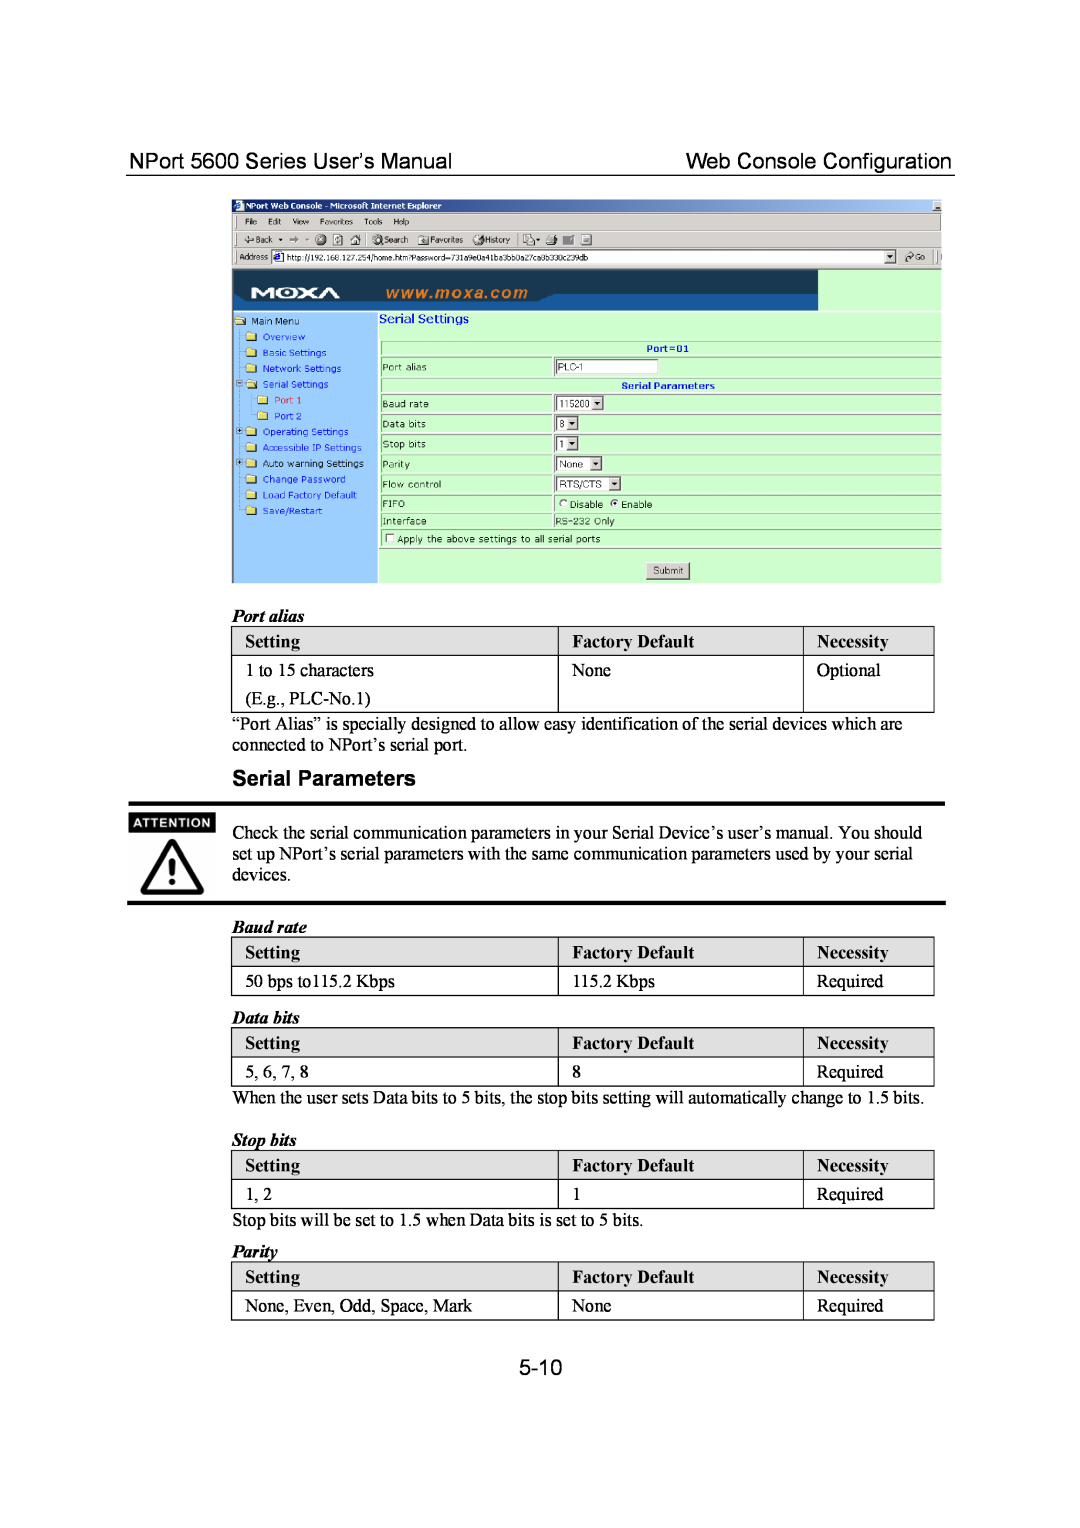 Moxa Technologies Serial Parameters, 5-10, NPort 5600 Series User’s Manual, Web Console Configuration, Port alias 